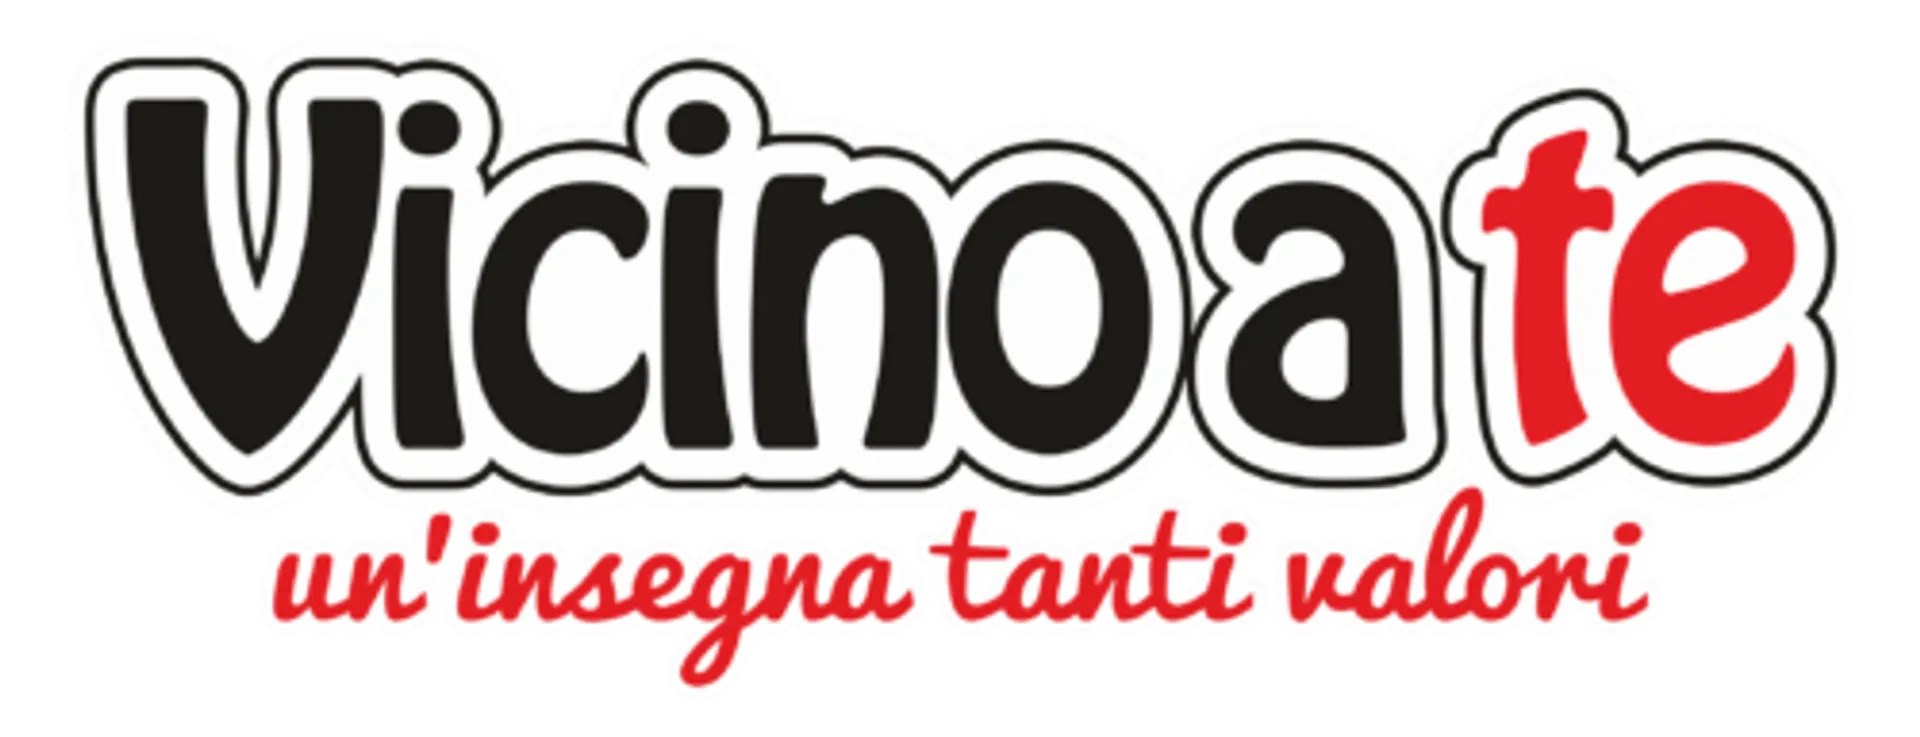 VICINO A TE SUPERMERCATI logo